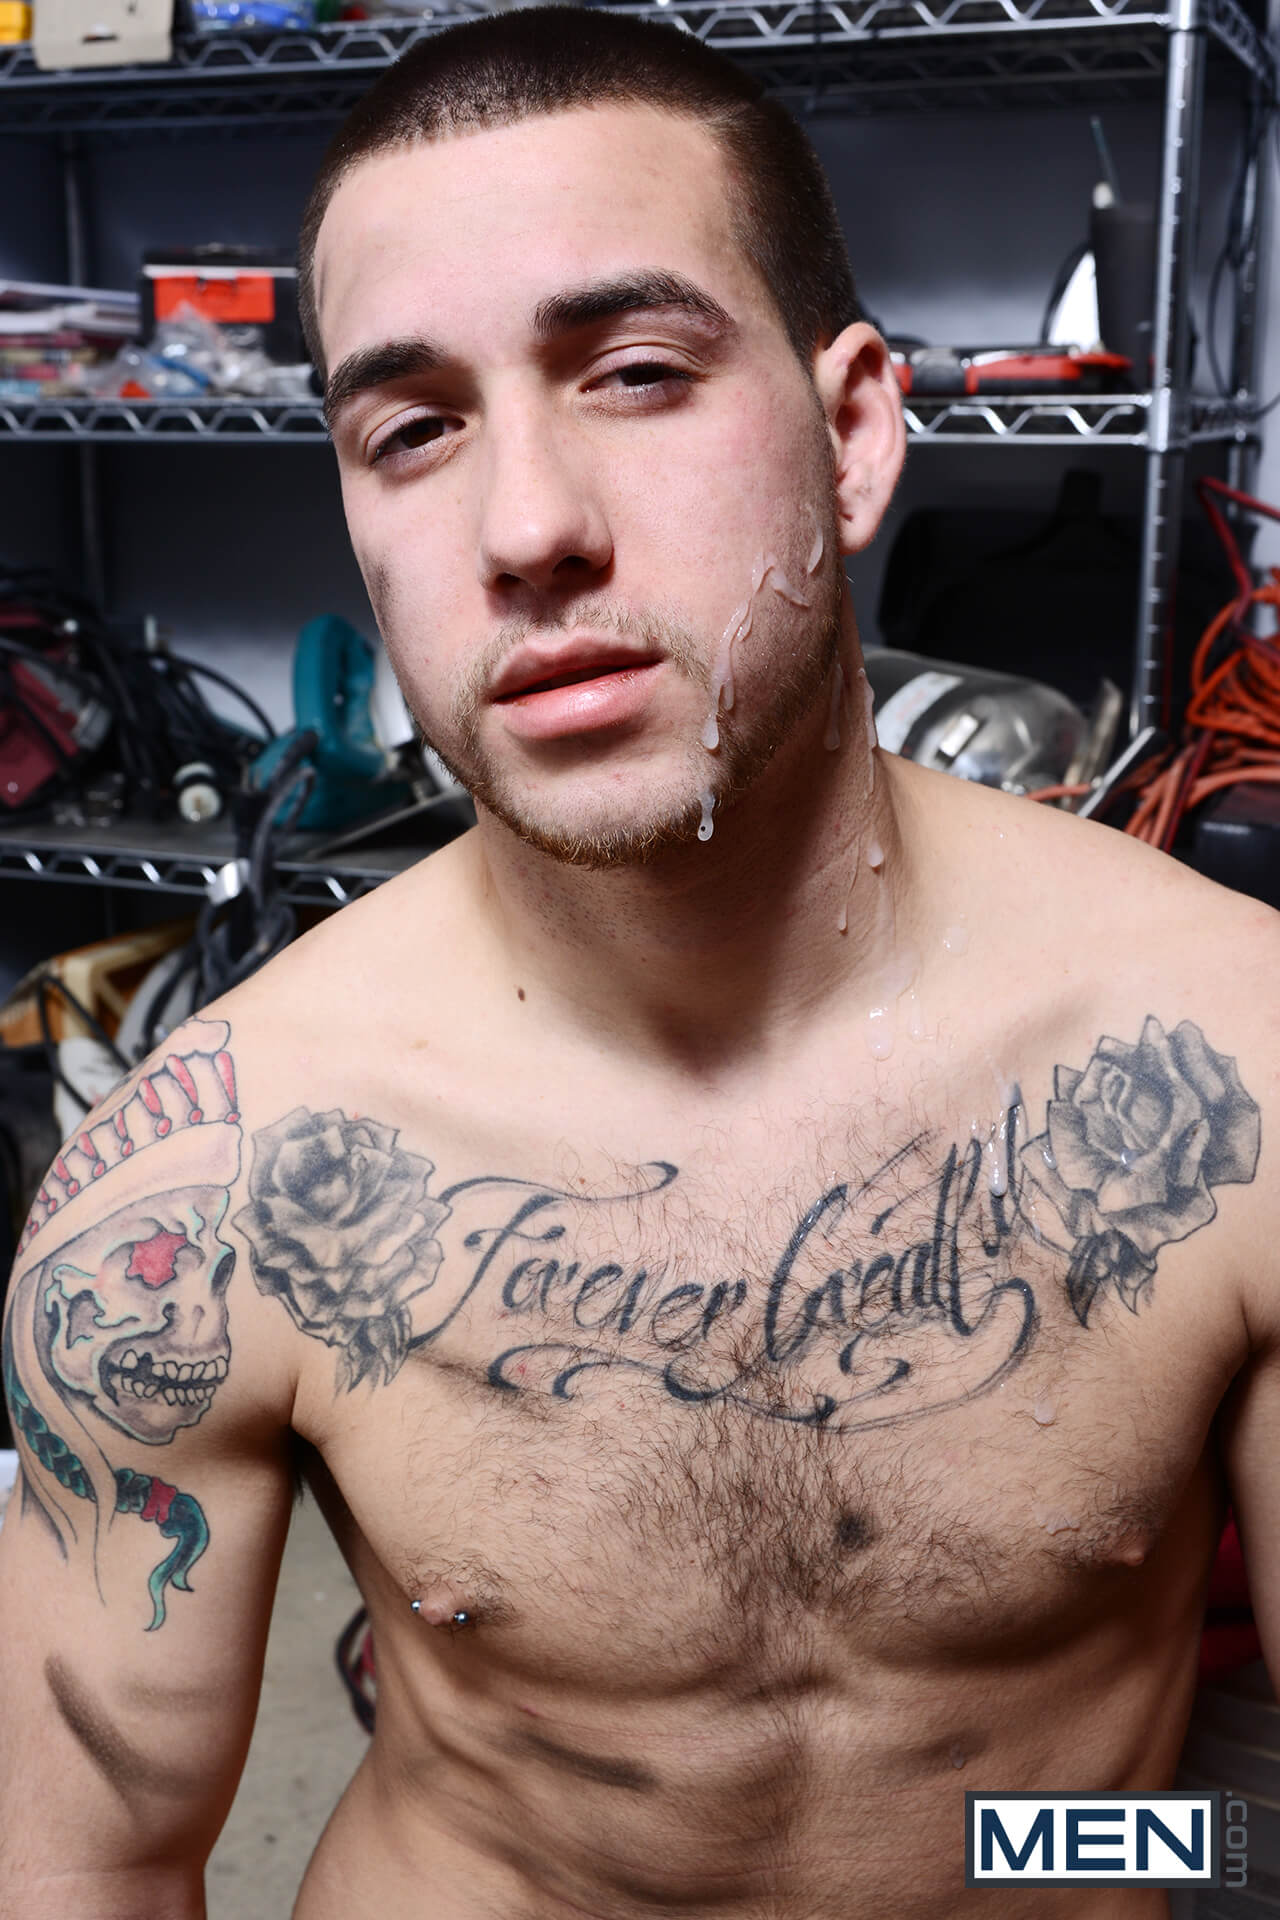 Hot guy tattoos